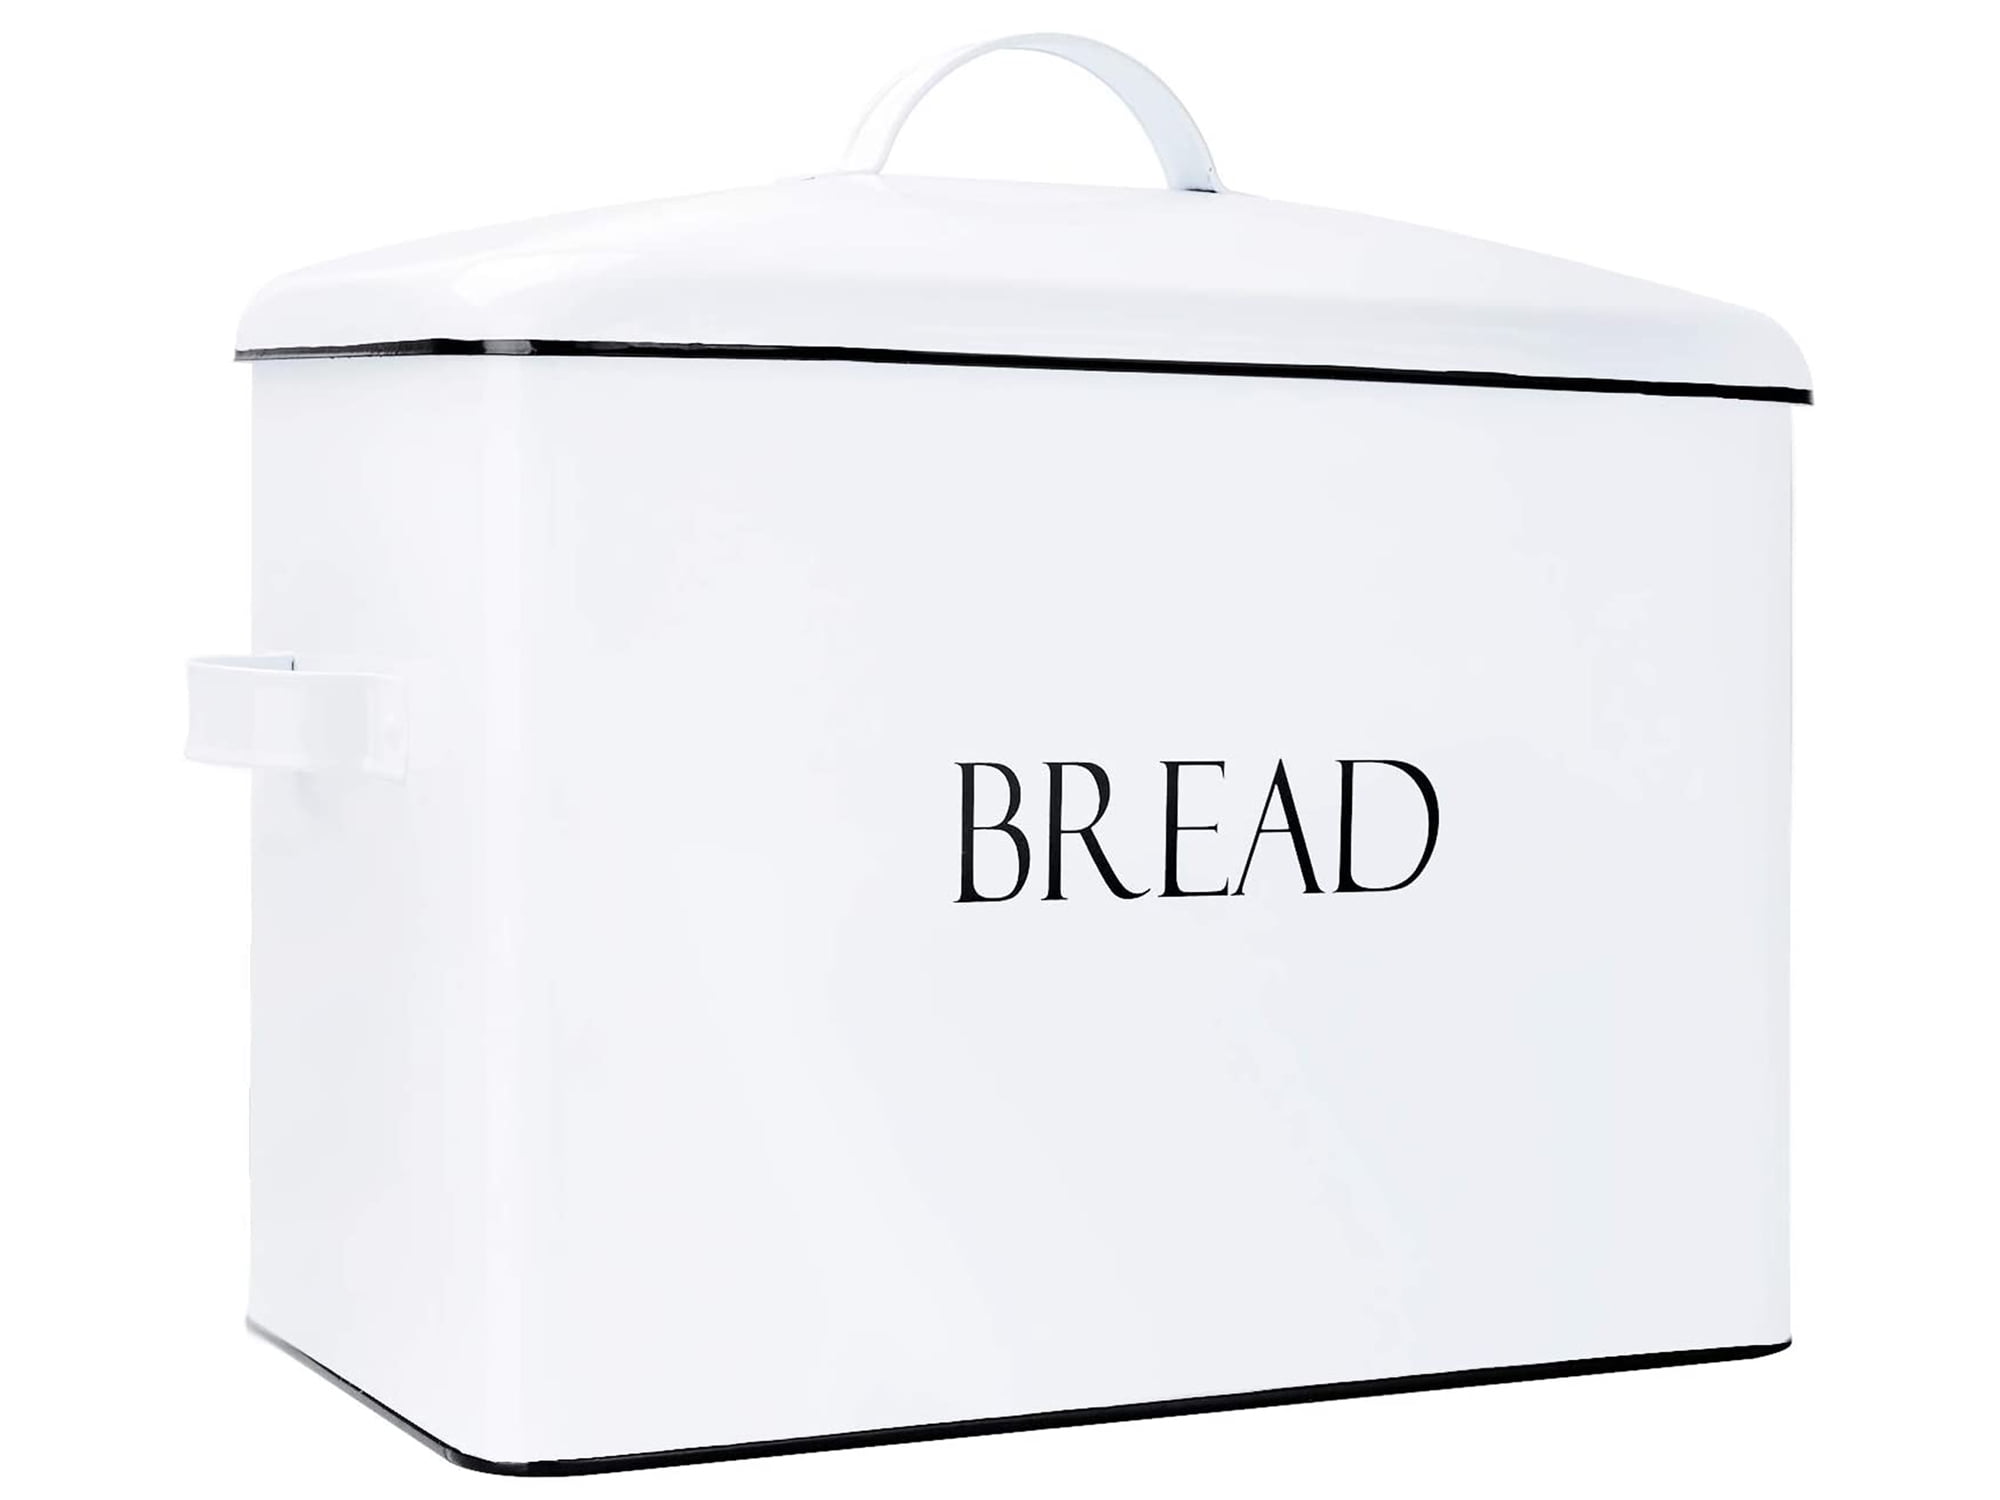 3 Piece Bakery Box brötchenbox Bread Container konditorenbox Euro-Standard 32cm Grey 